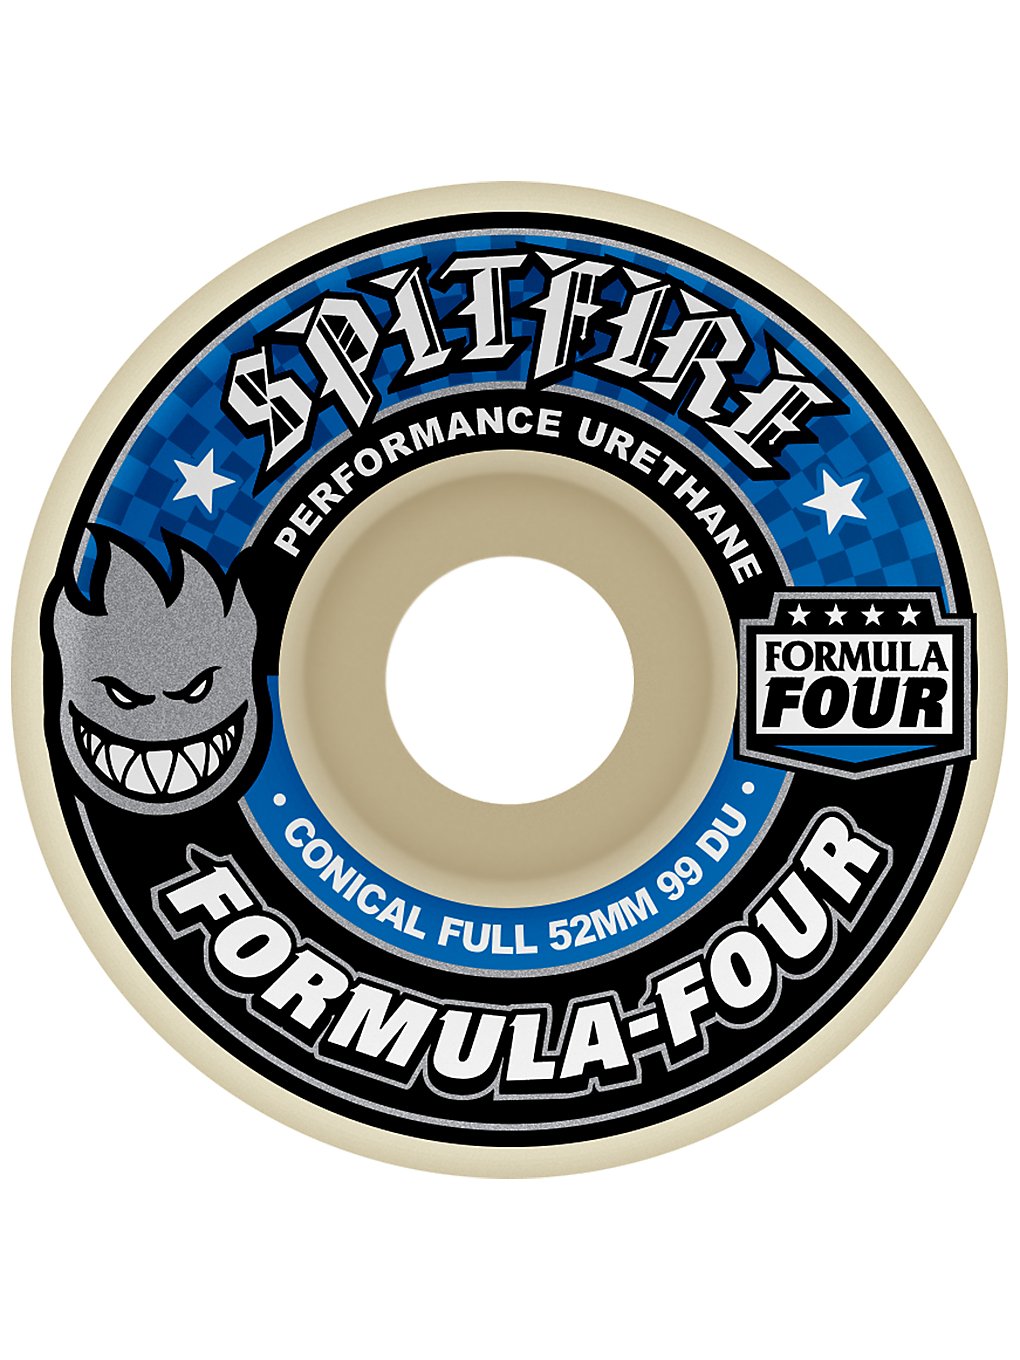 Spitfire Formula 4 99D Conical Full 52mm Wheels blue print kaufen